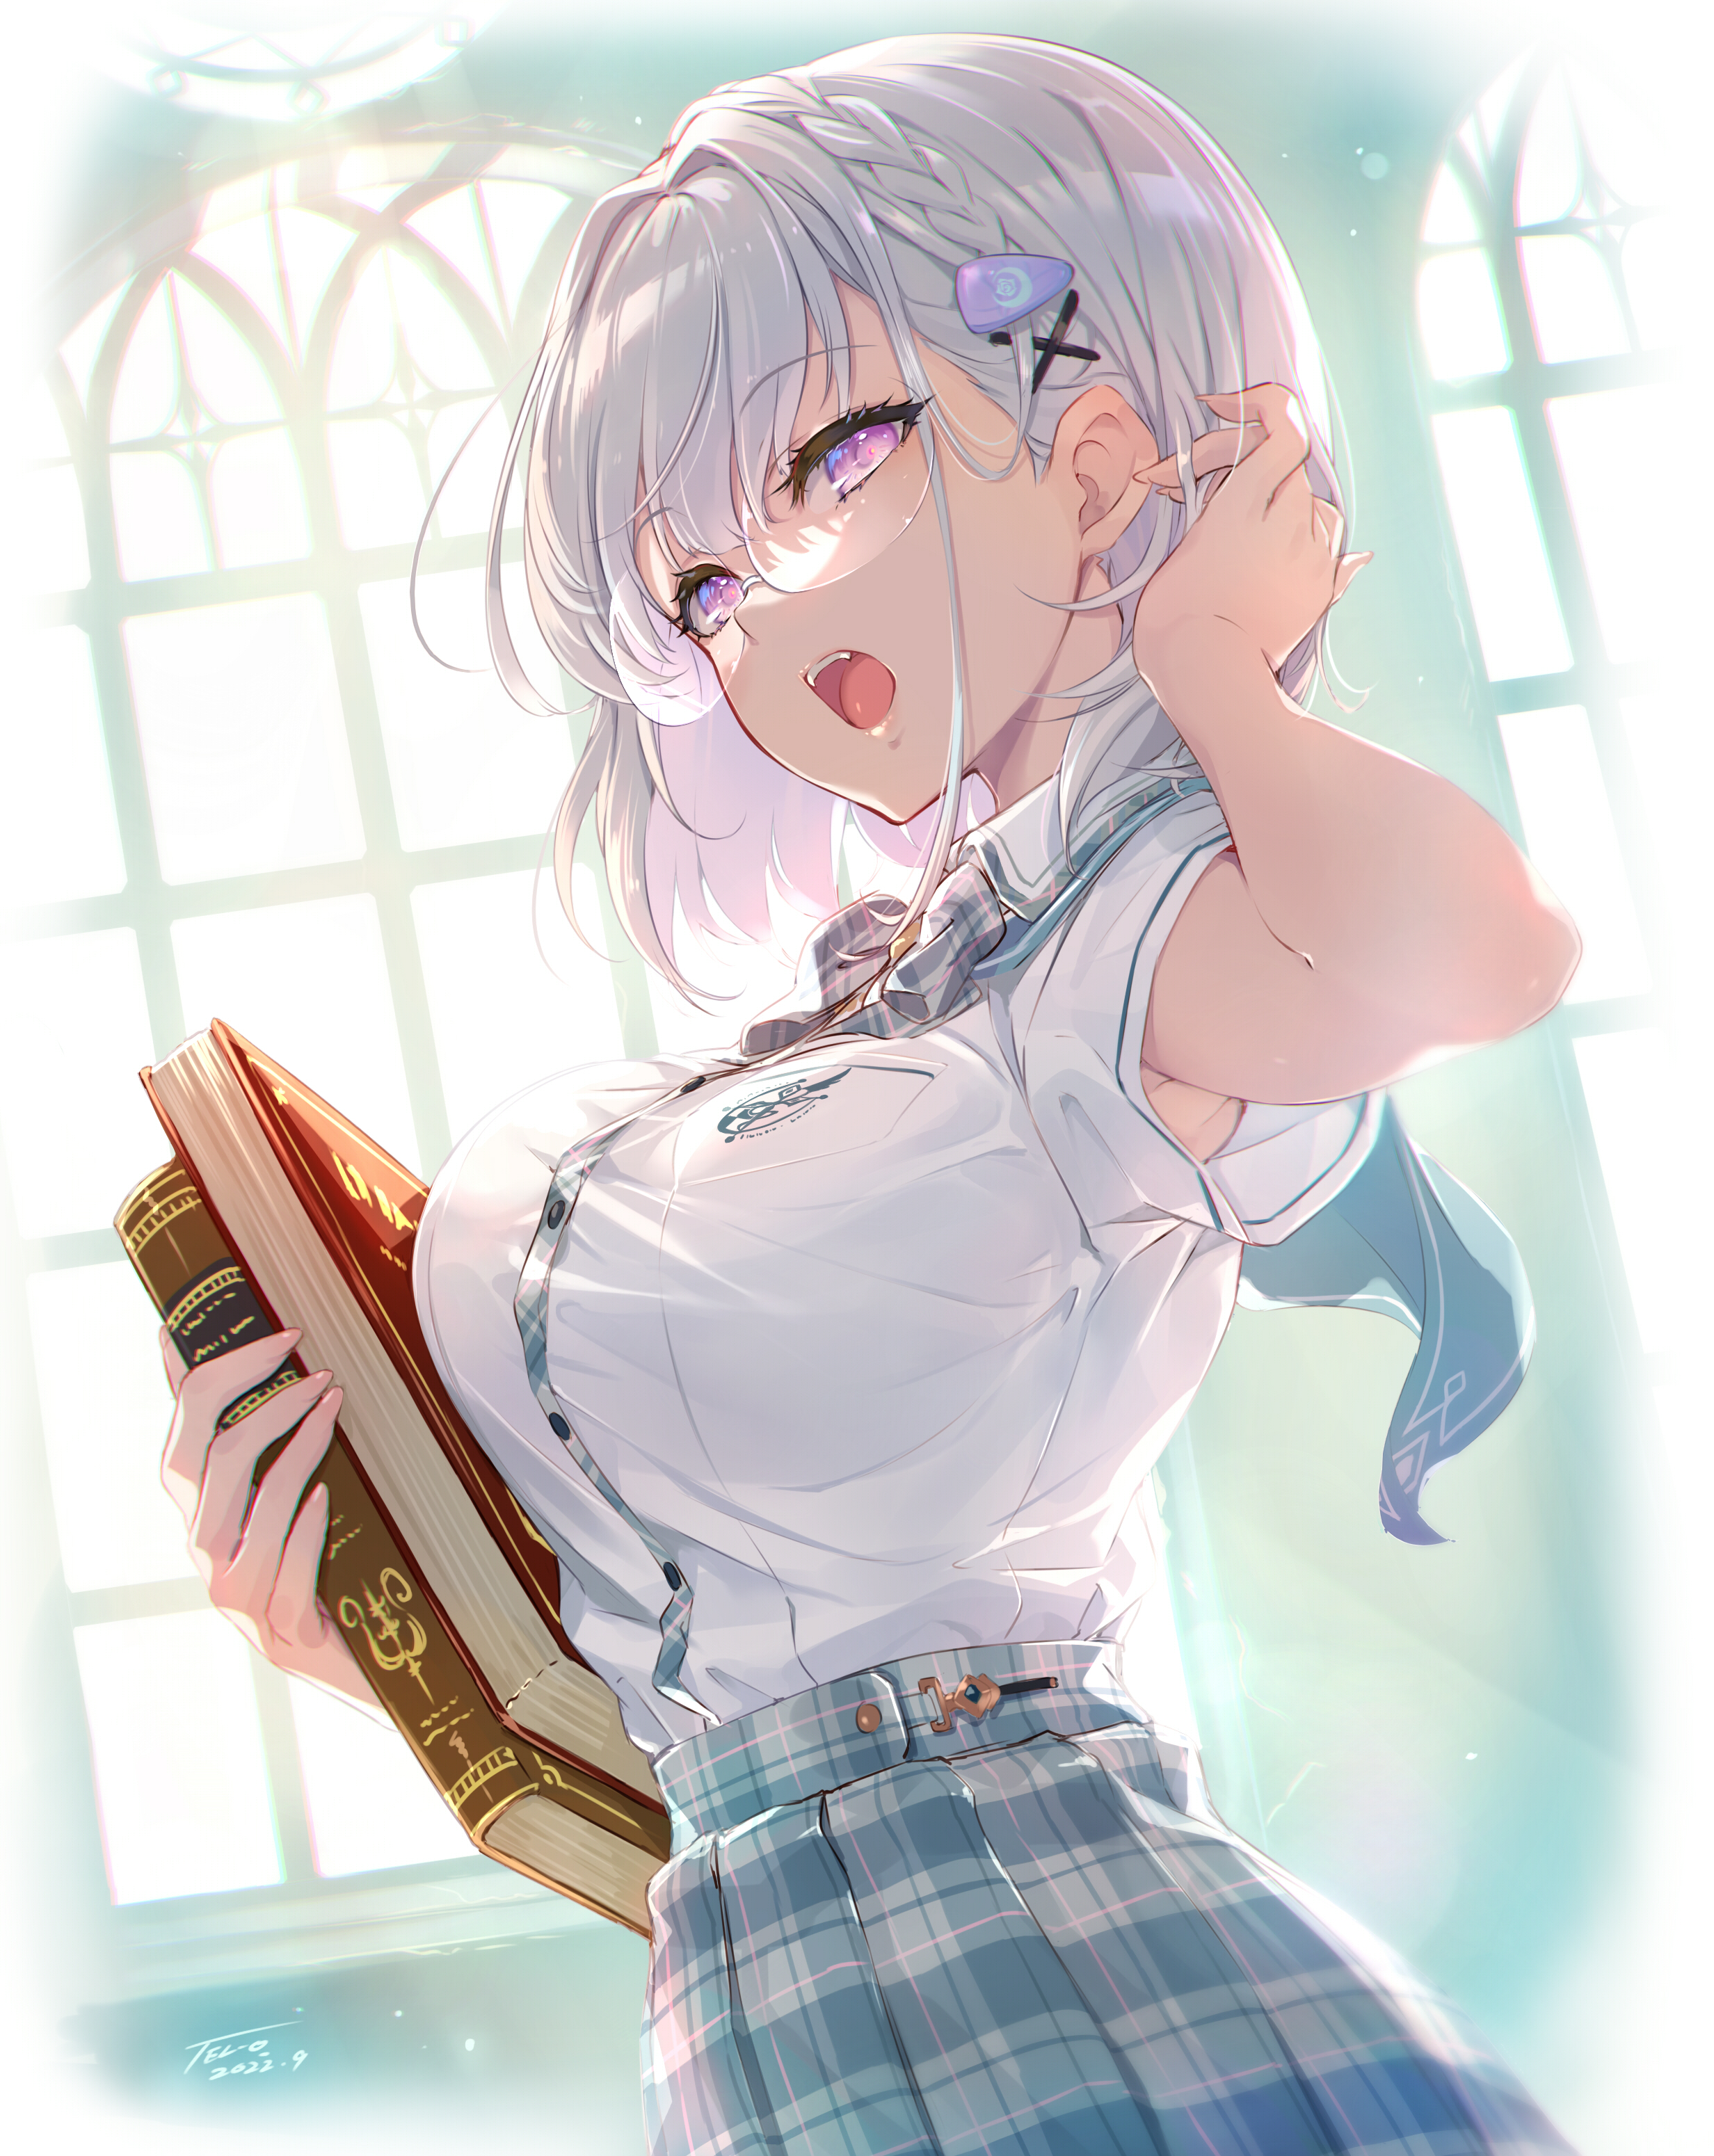 Anime 2464x3100 Tel-O short hair anime girls purple eyes white hair books school uniform schoolgirl glasses open mouth white shirt one arm up